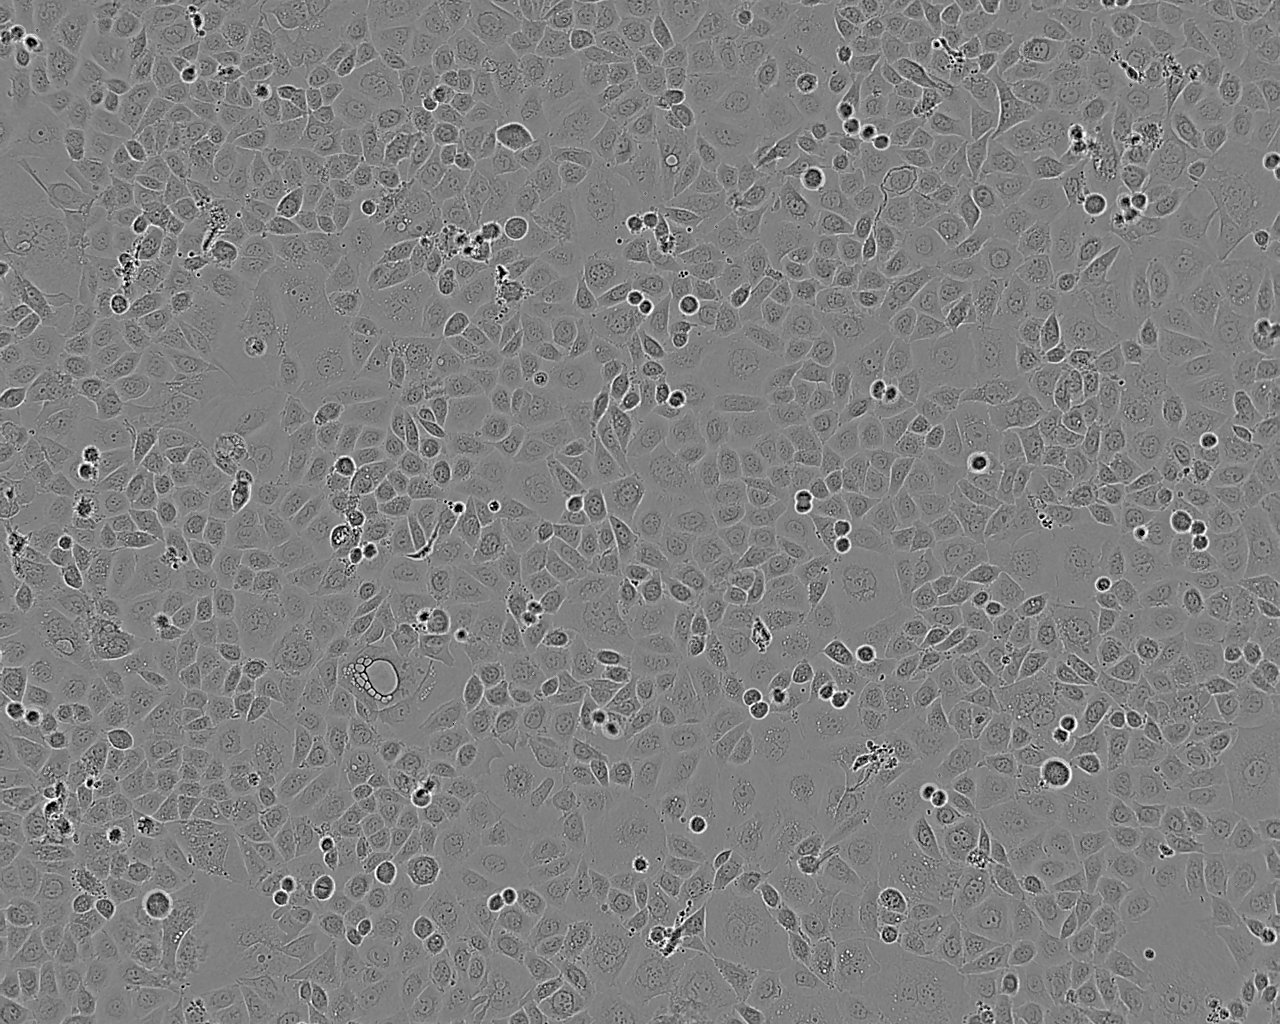 BIU-87 epithelioid cells人膀胱癌细胞系